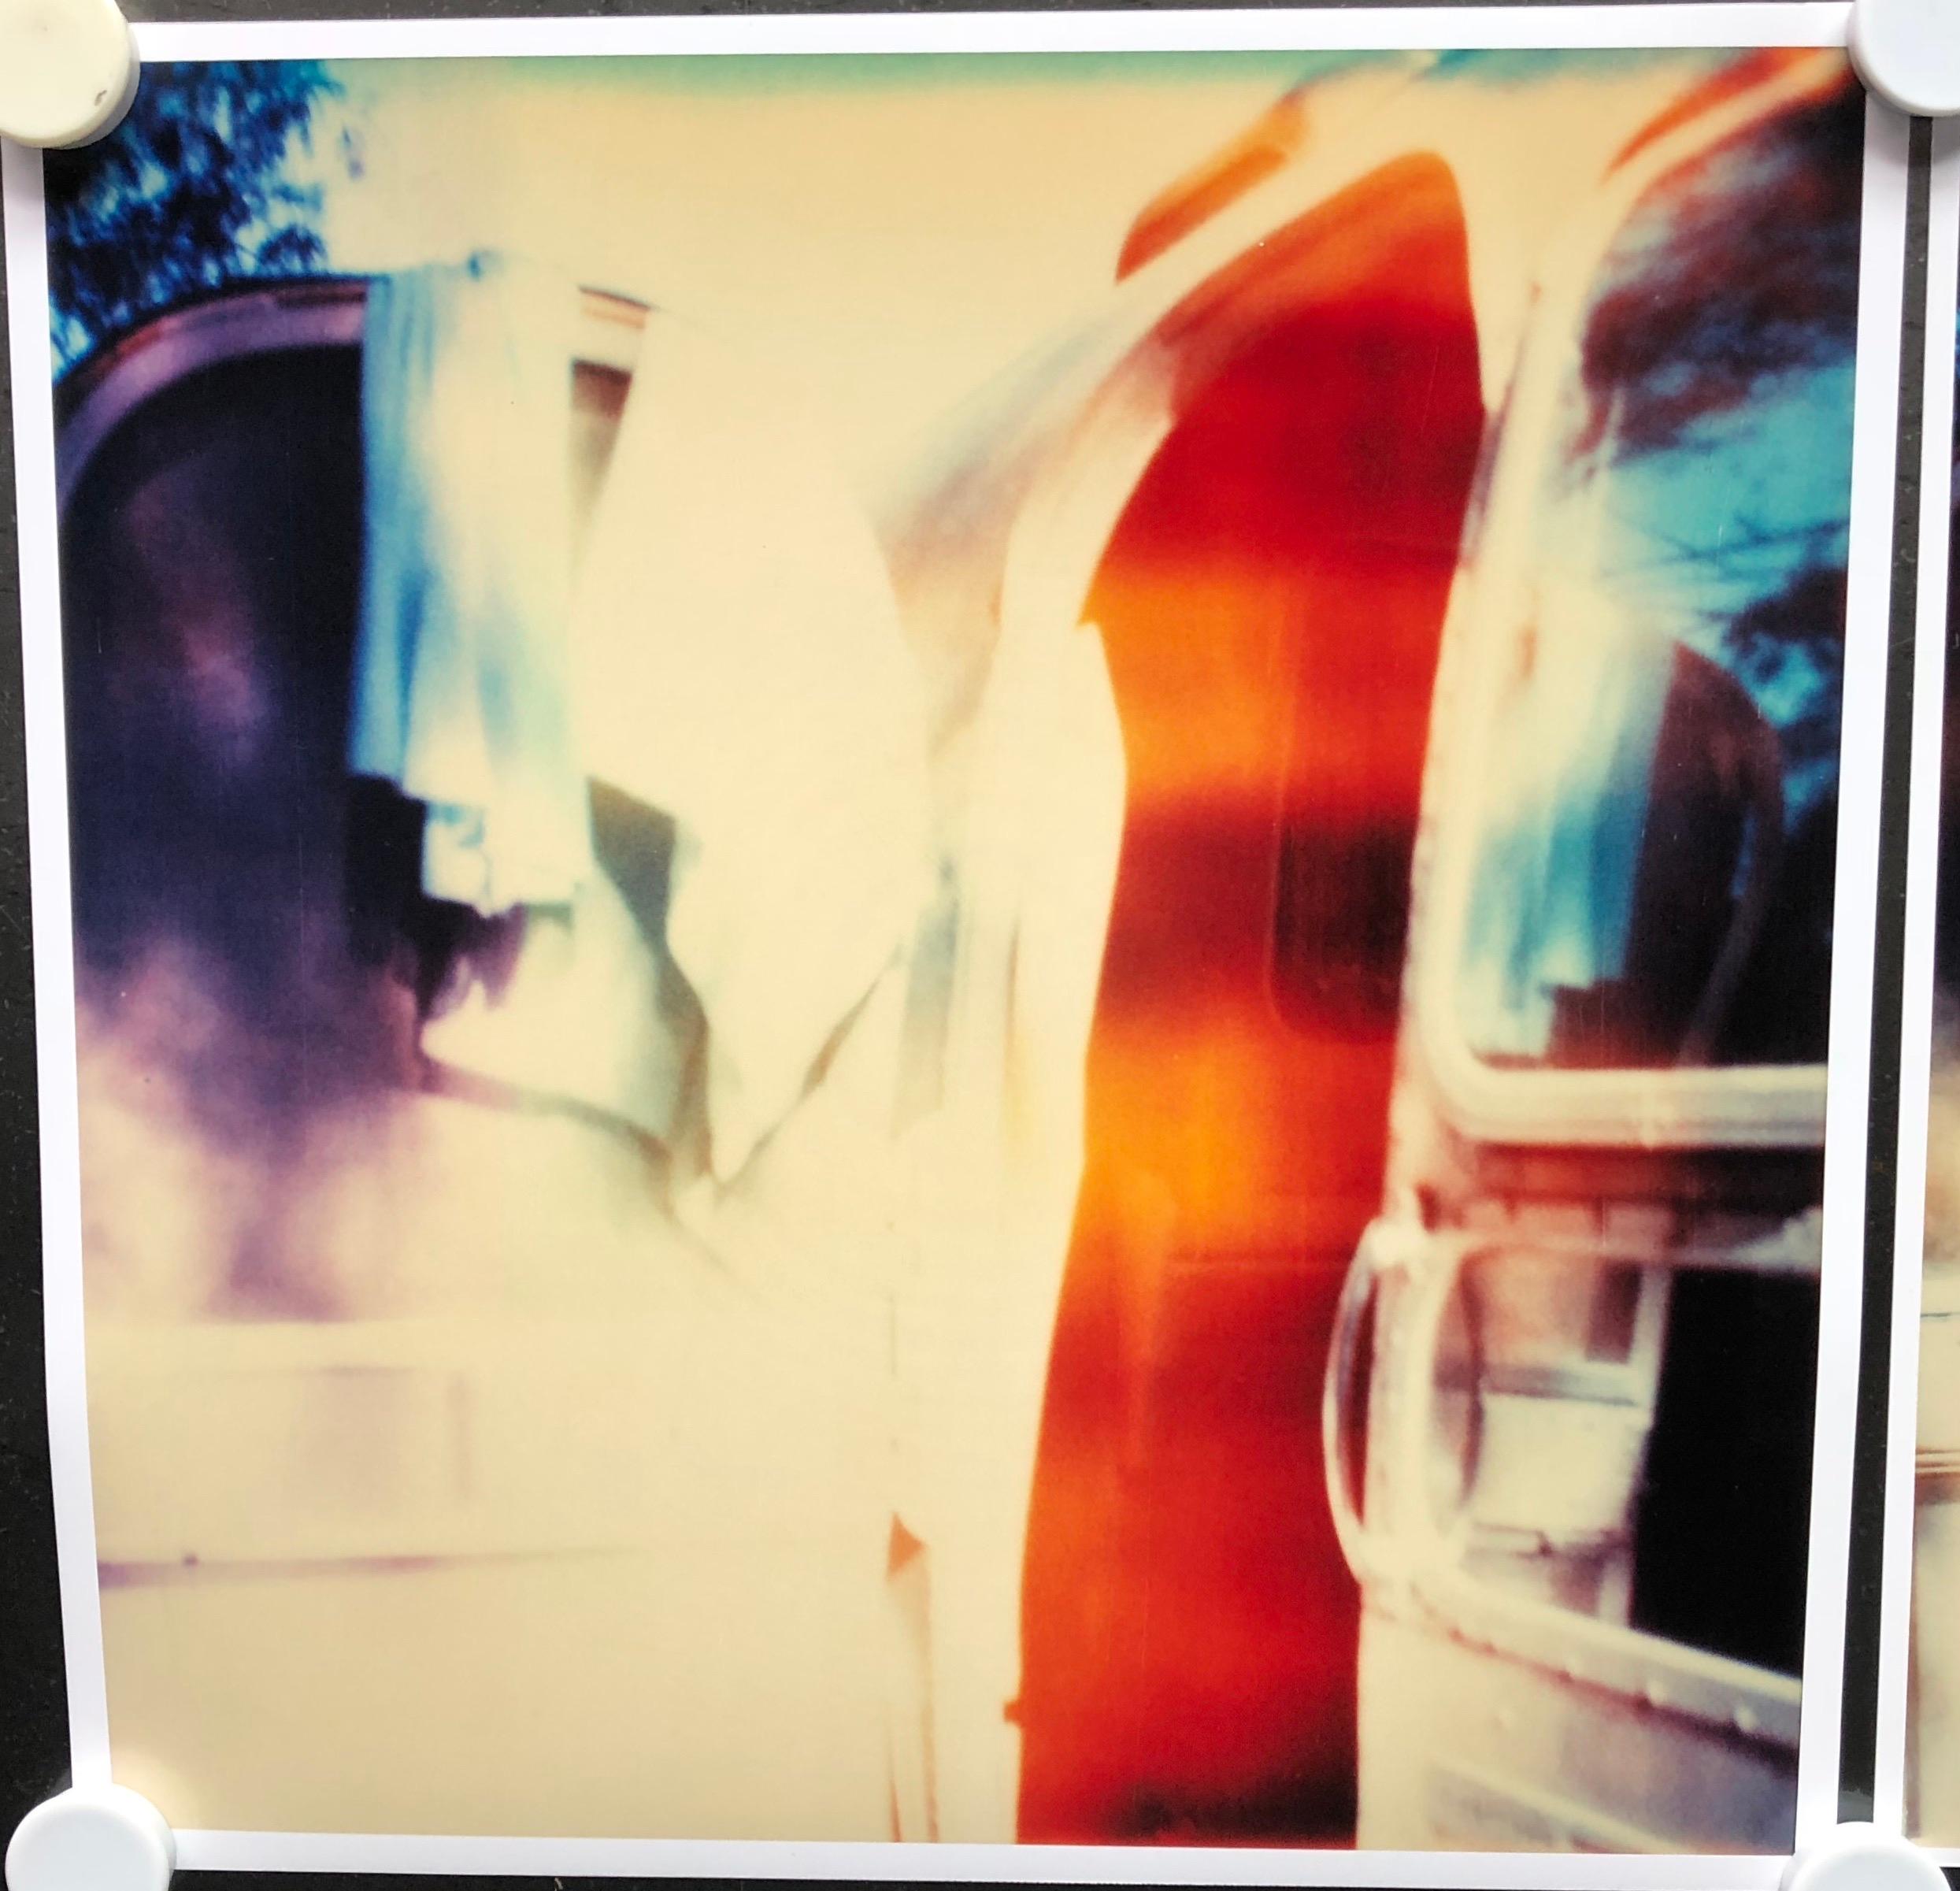 There’s blood on the Dress (Sidewinder), analog, triptych - Photograph by Stefanie Schneider